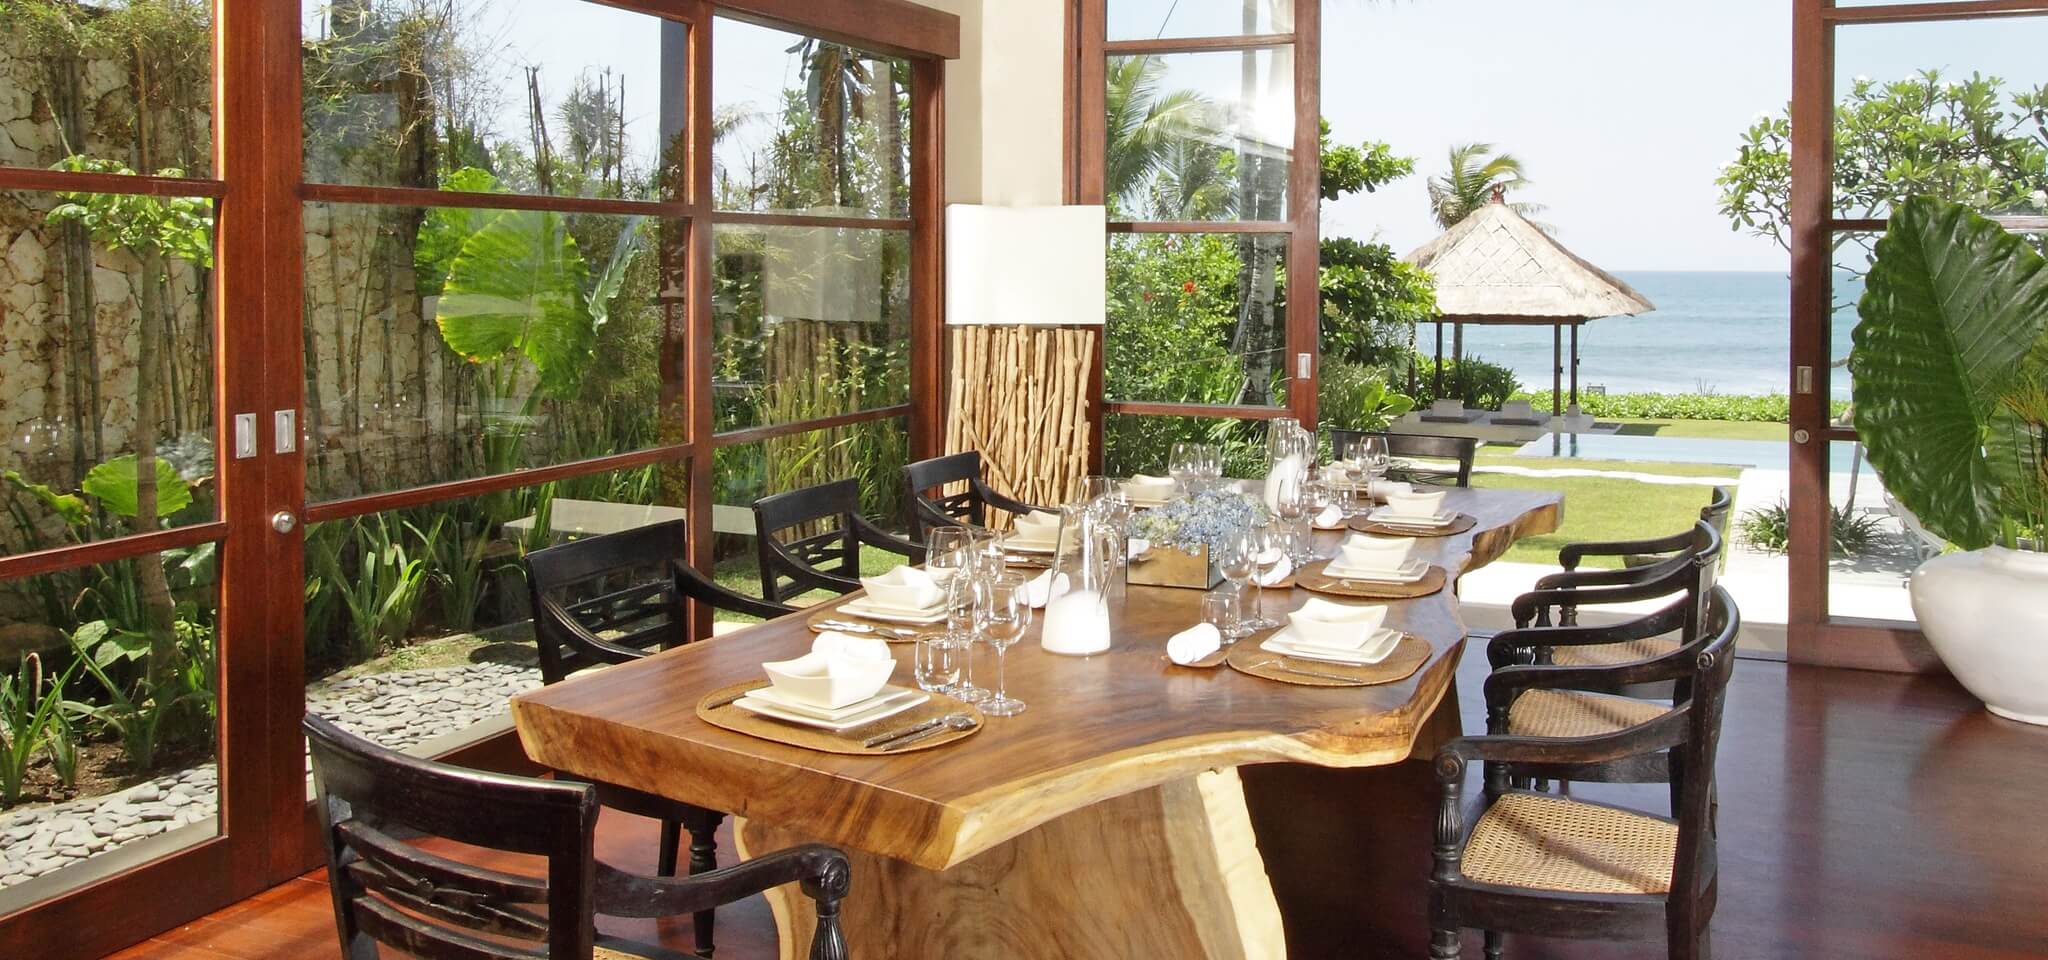 Dining Area of Villa Melissa - Pantai Lima Estate